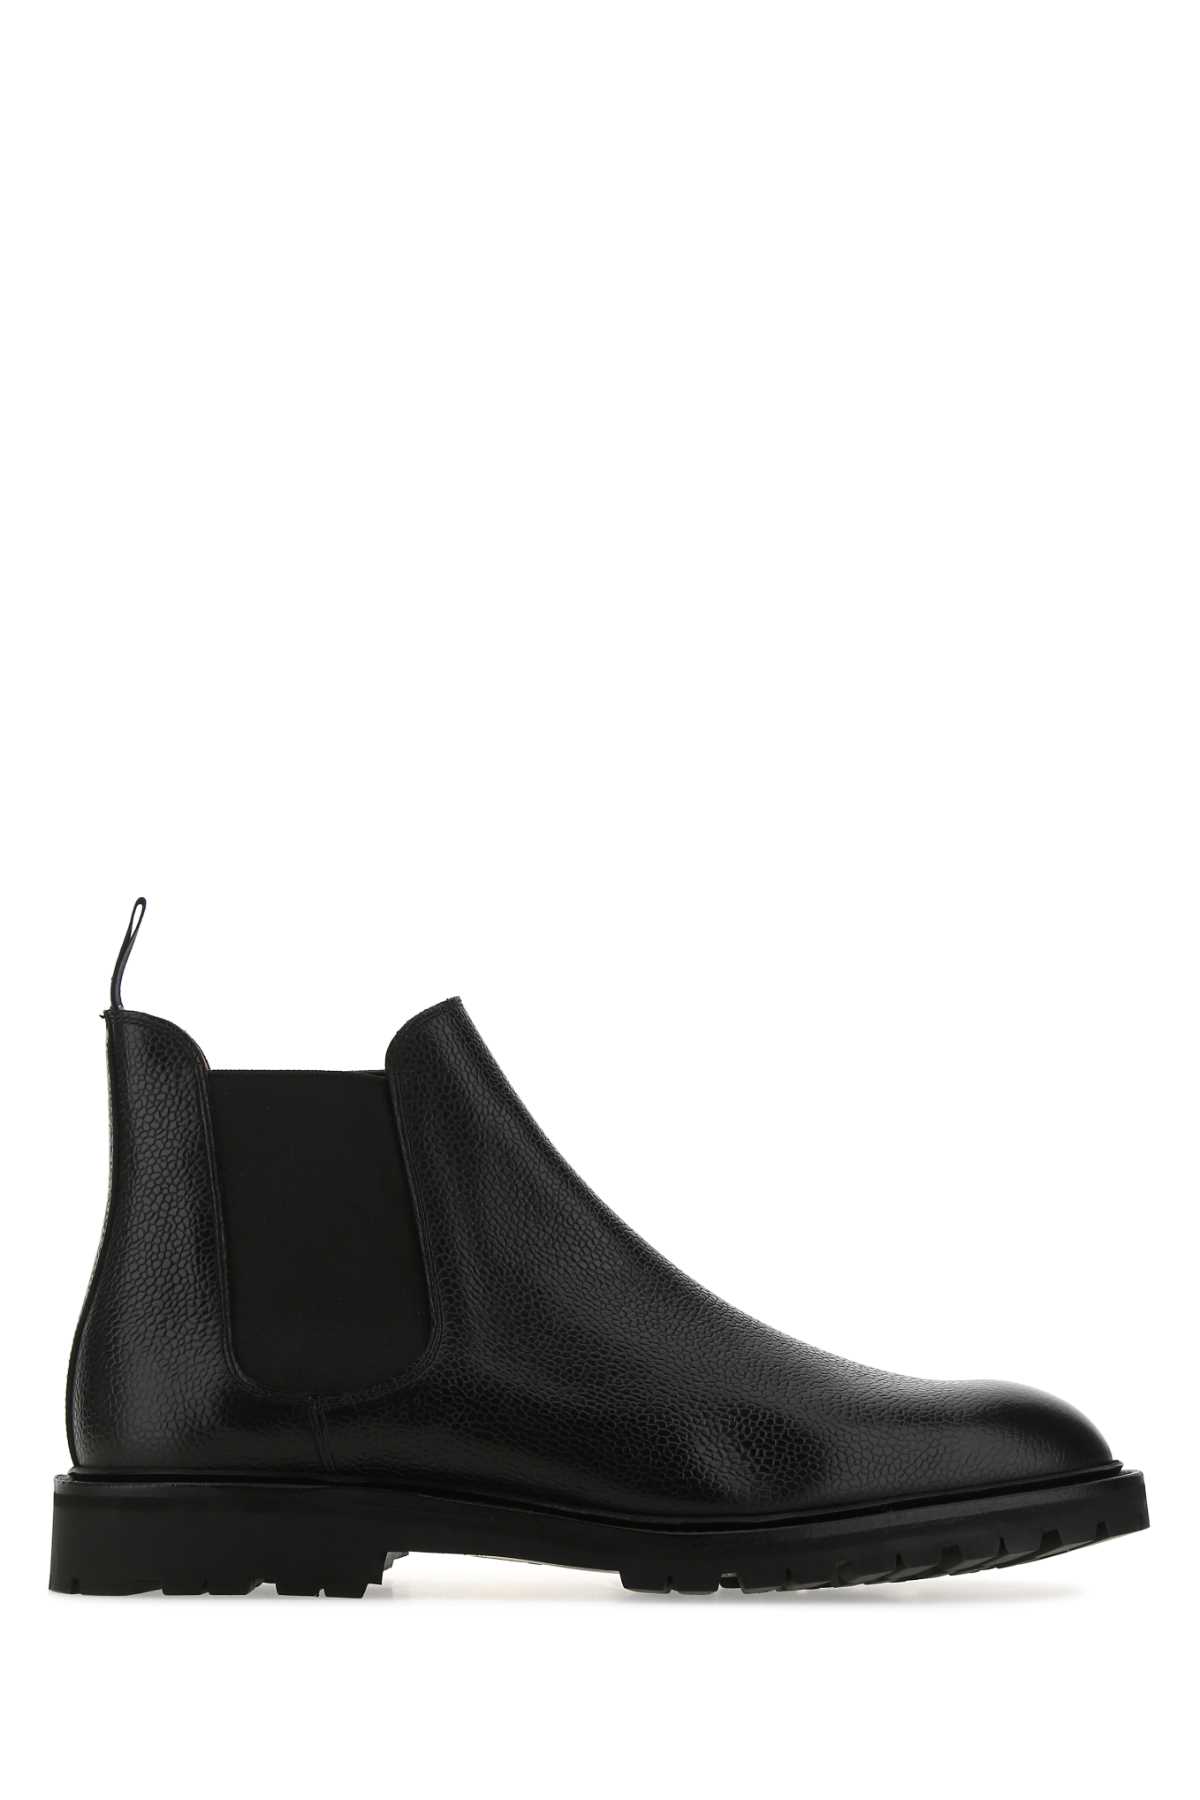 Shop Crockett &amp; Jones Black Leather Chelsea 11 Ankle Boots